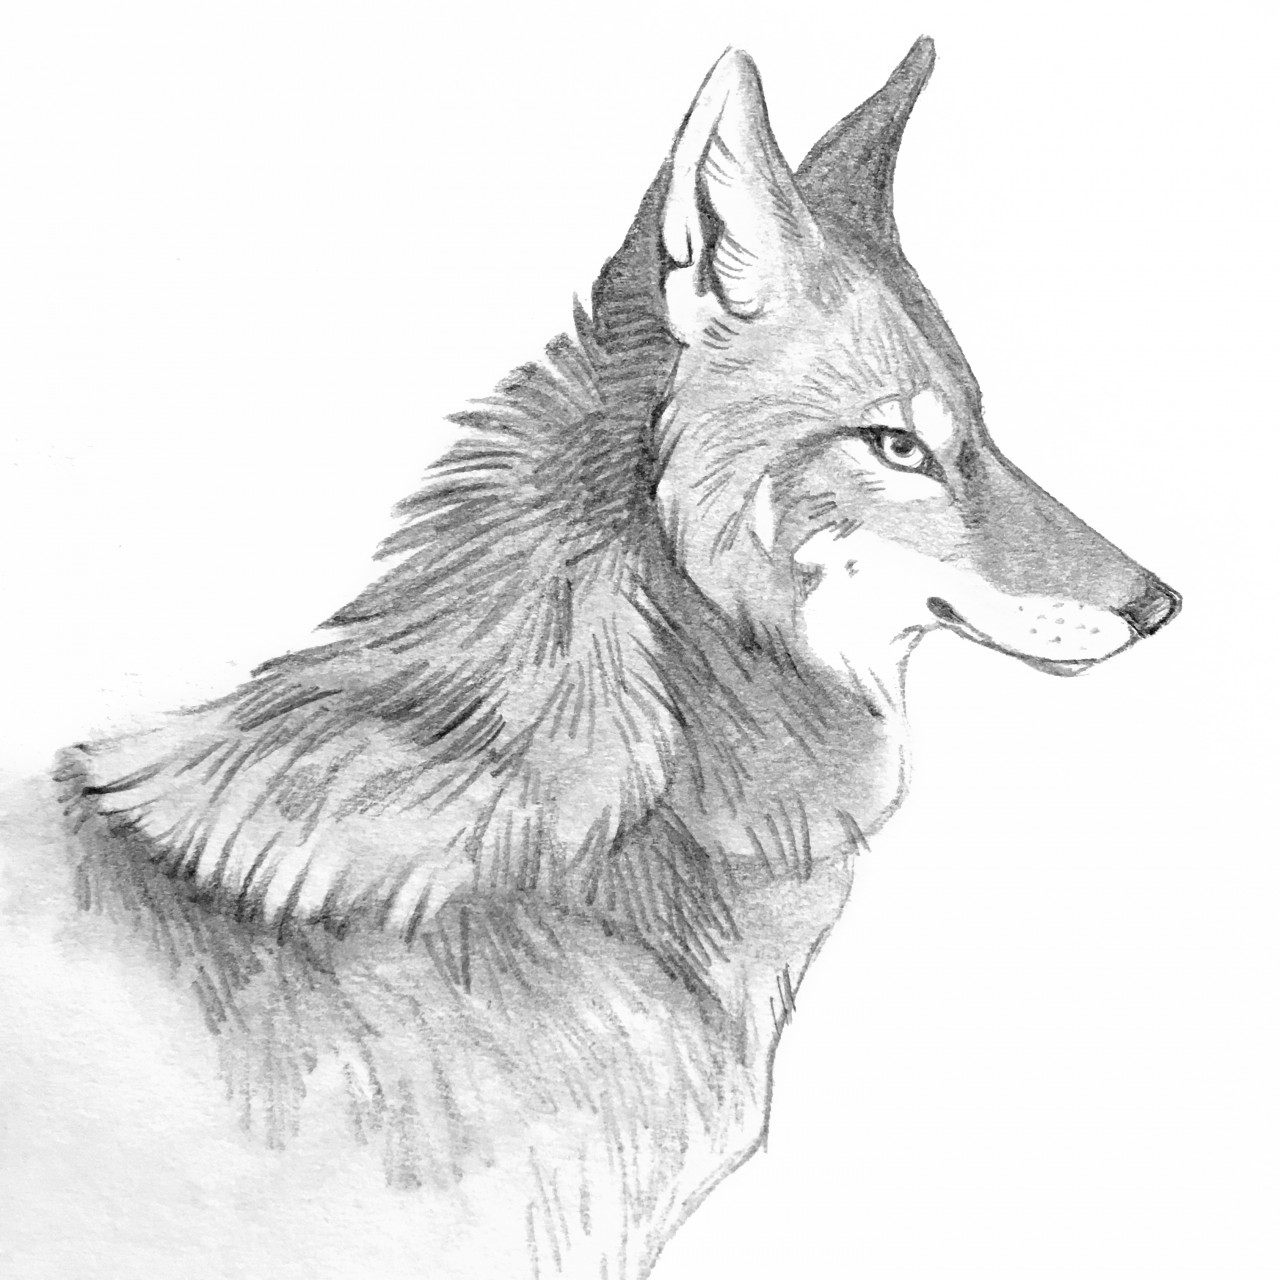 Coyote Sketch at Explore collection of Coyote Sketch